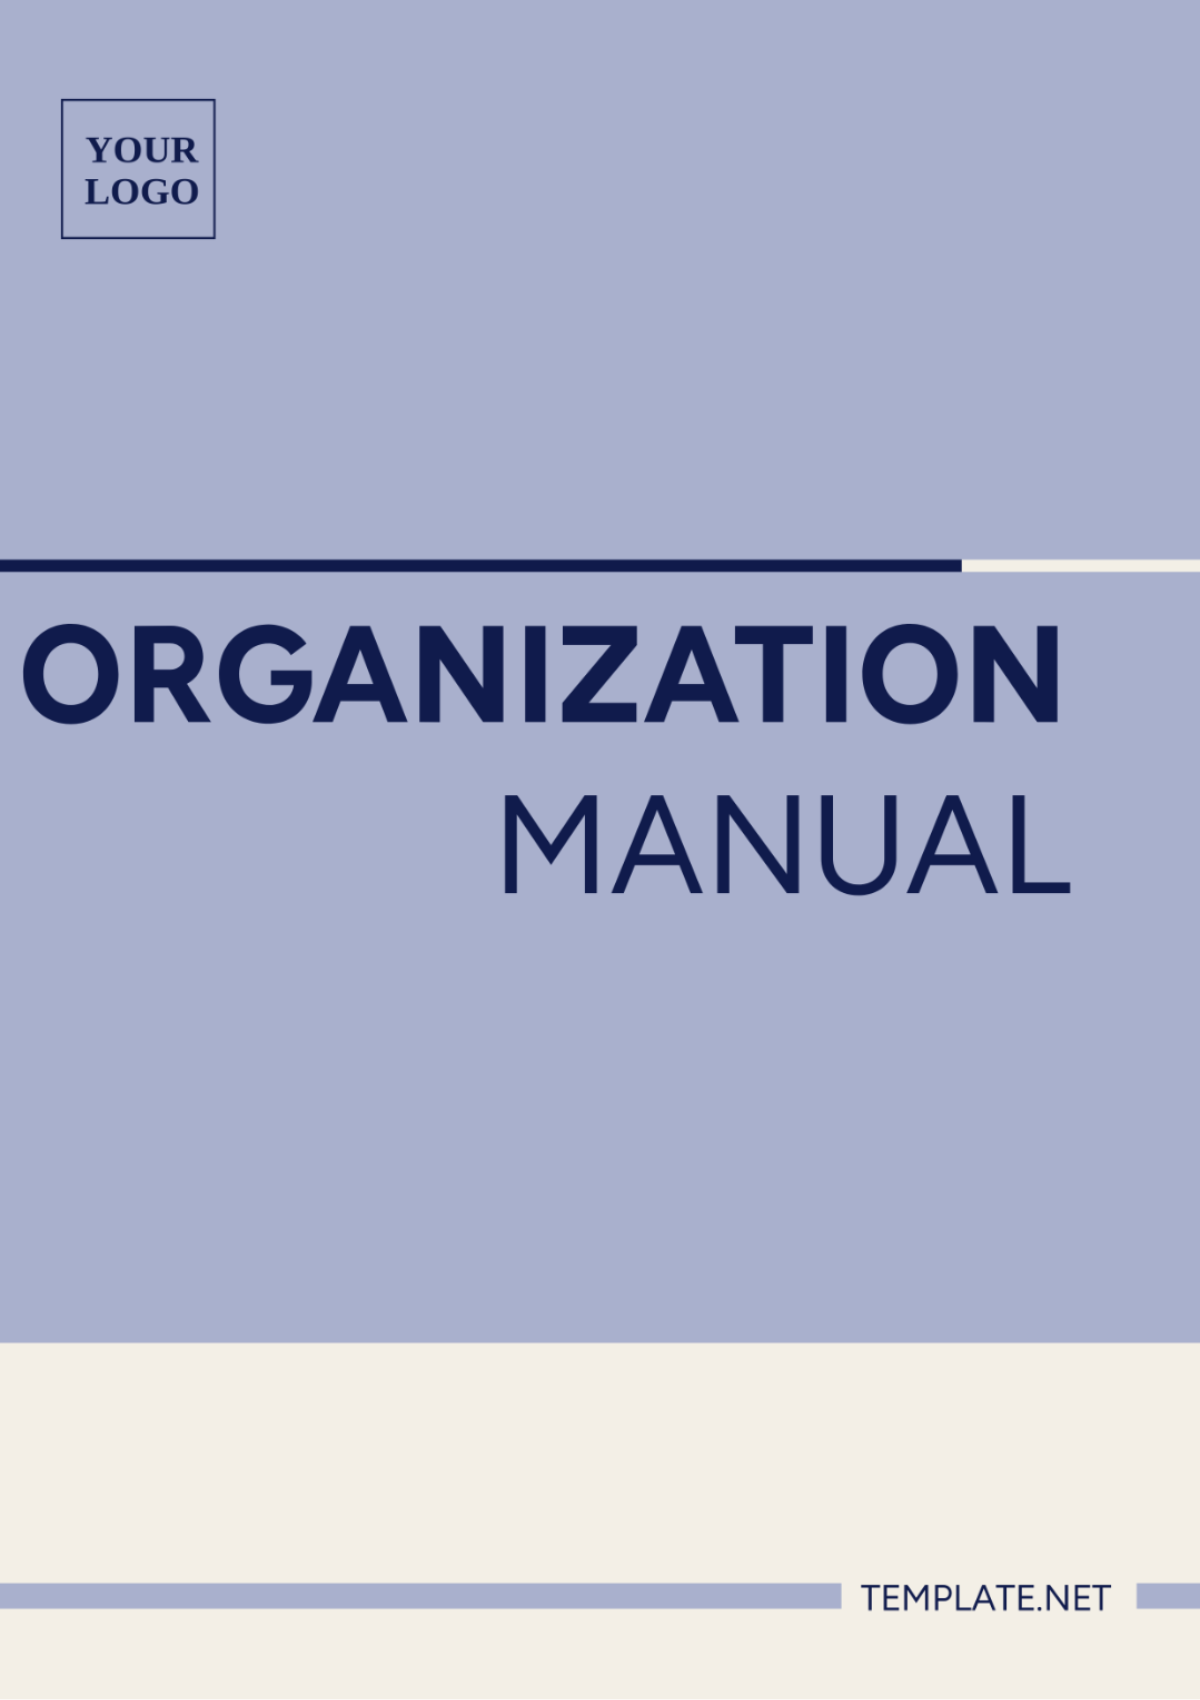 Organization Manual Template